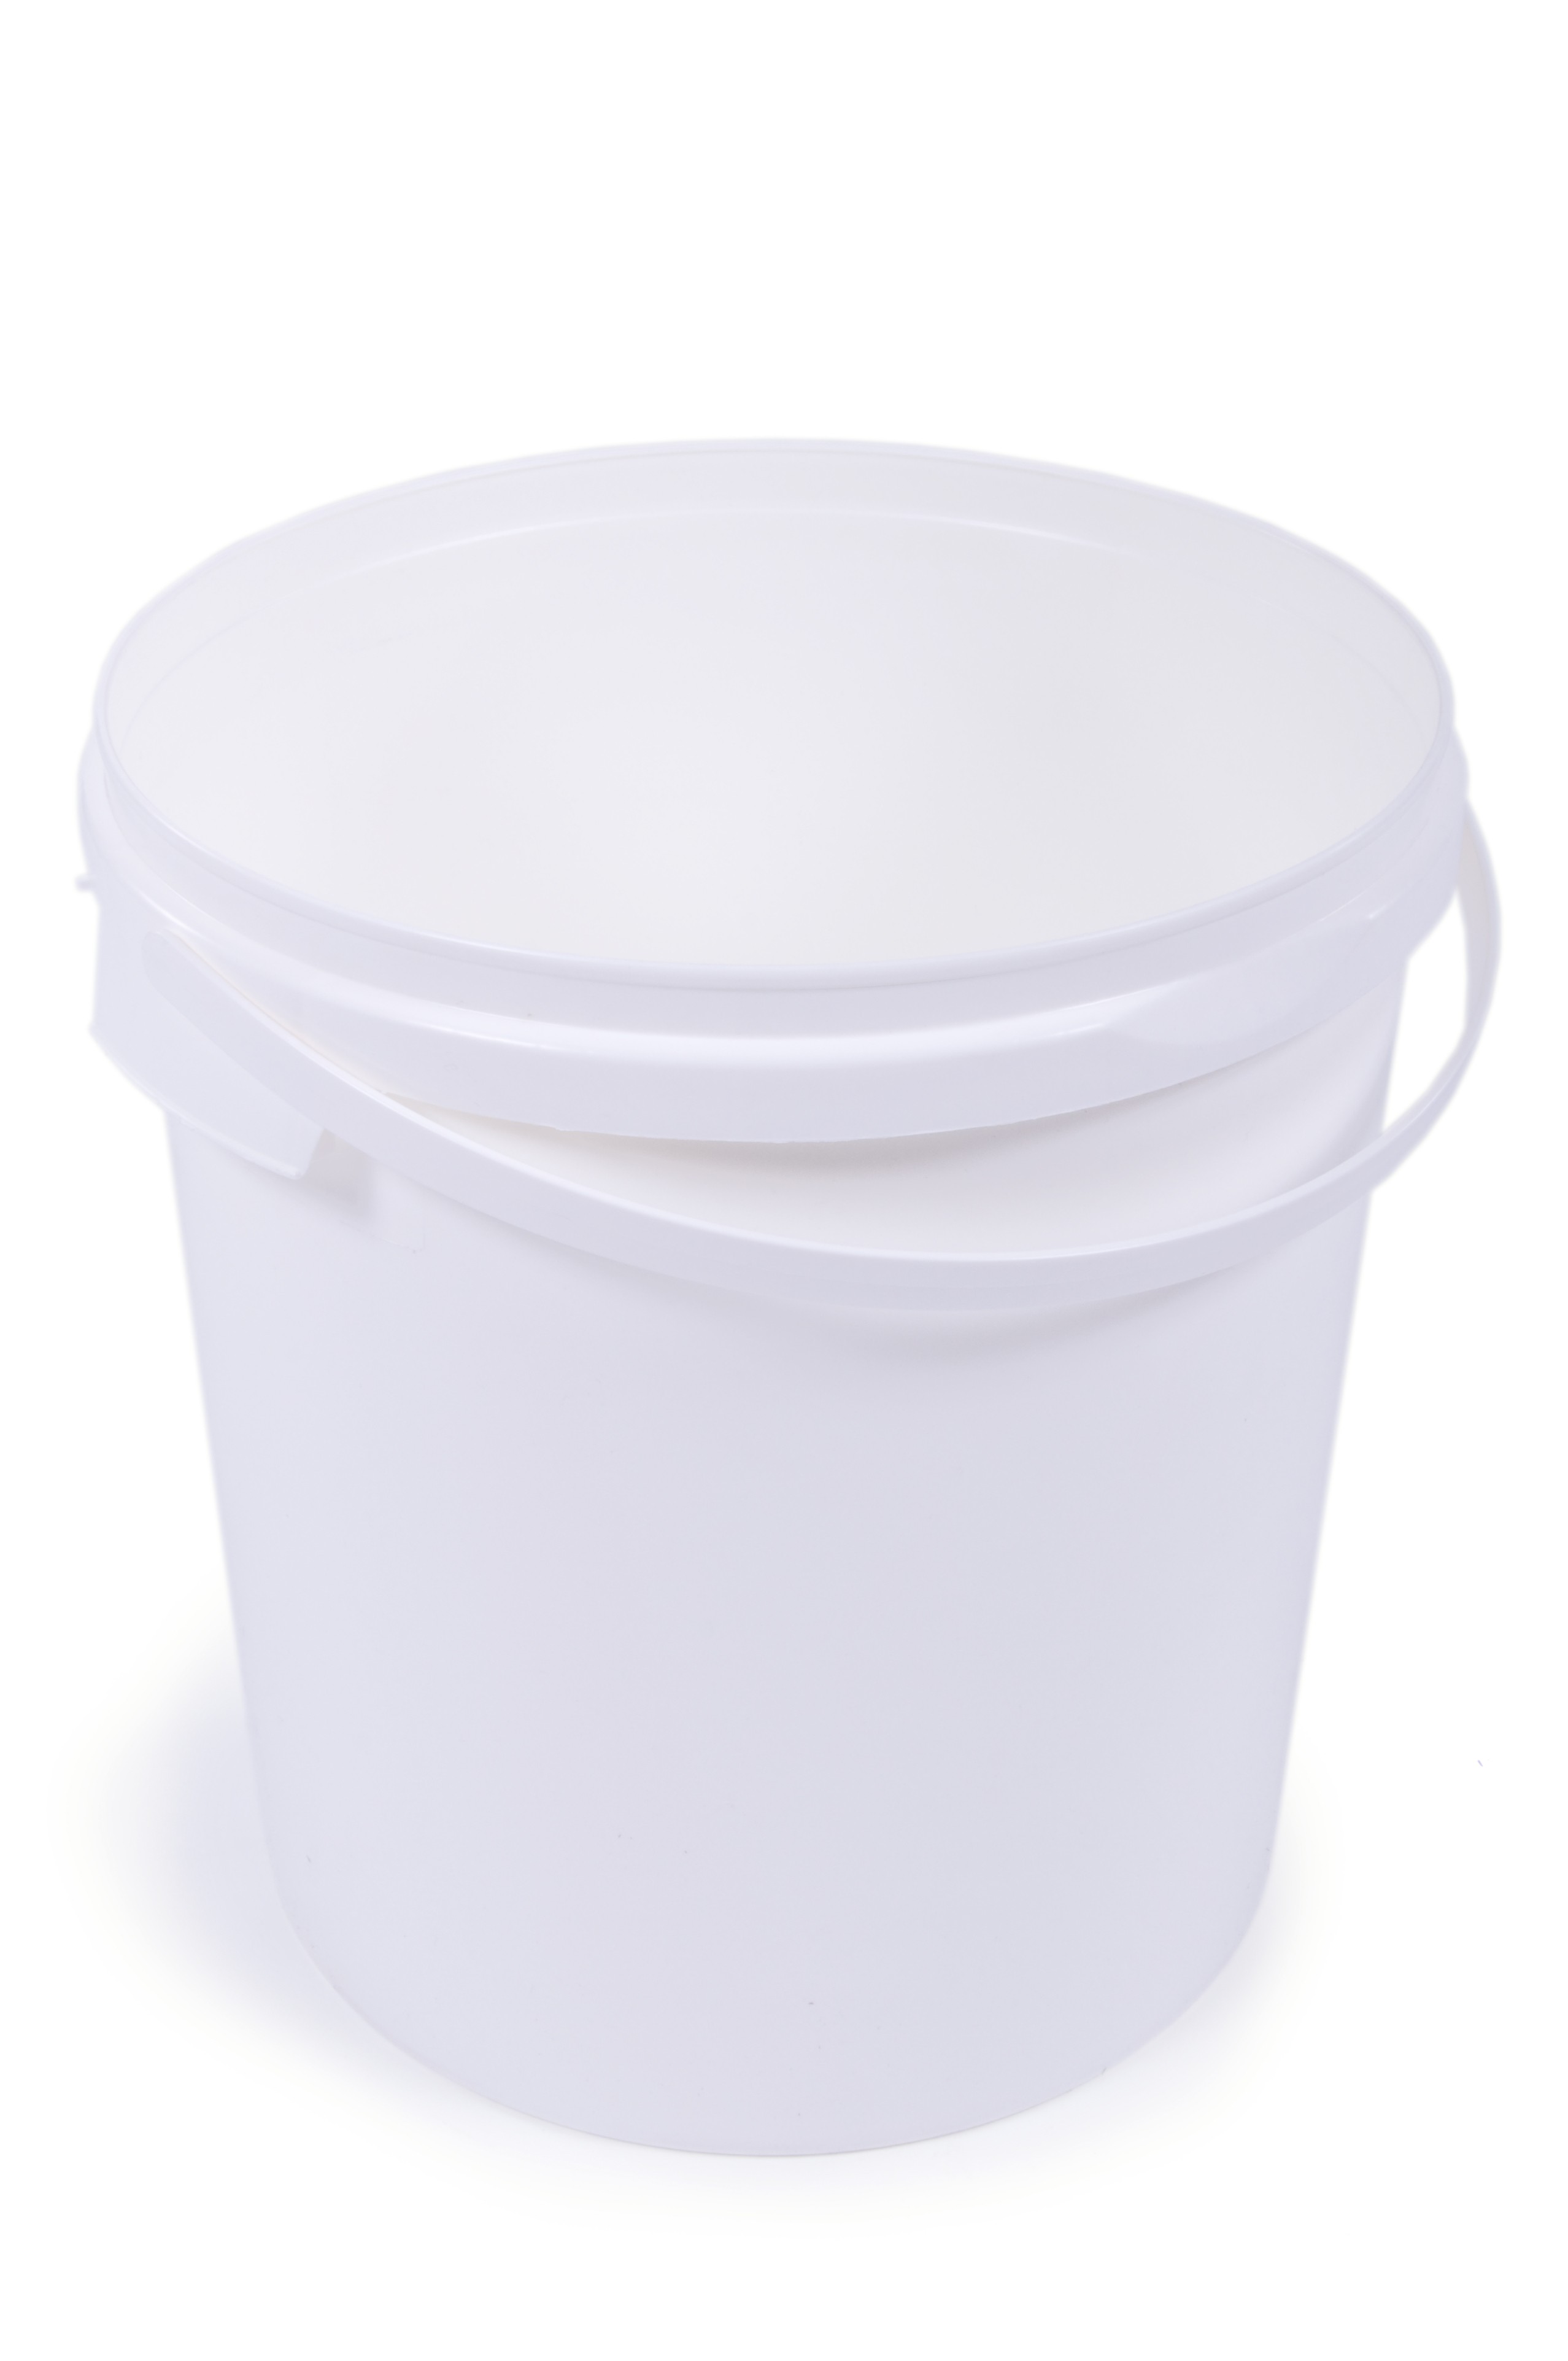 sealable plastic buckets